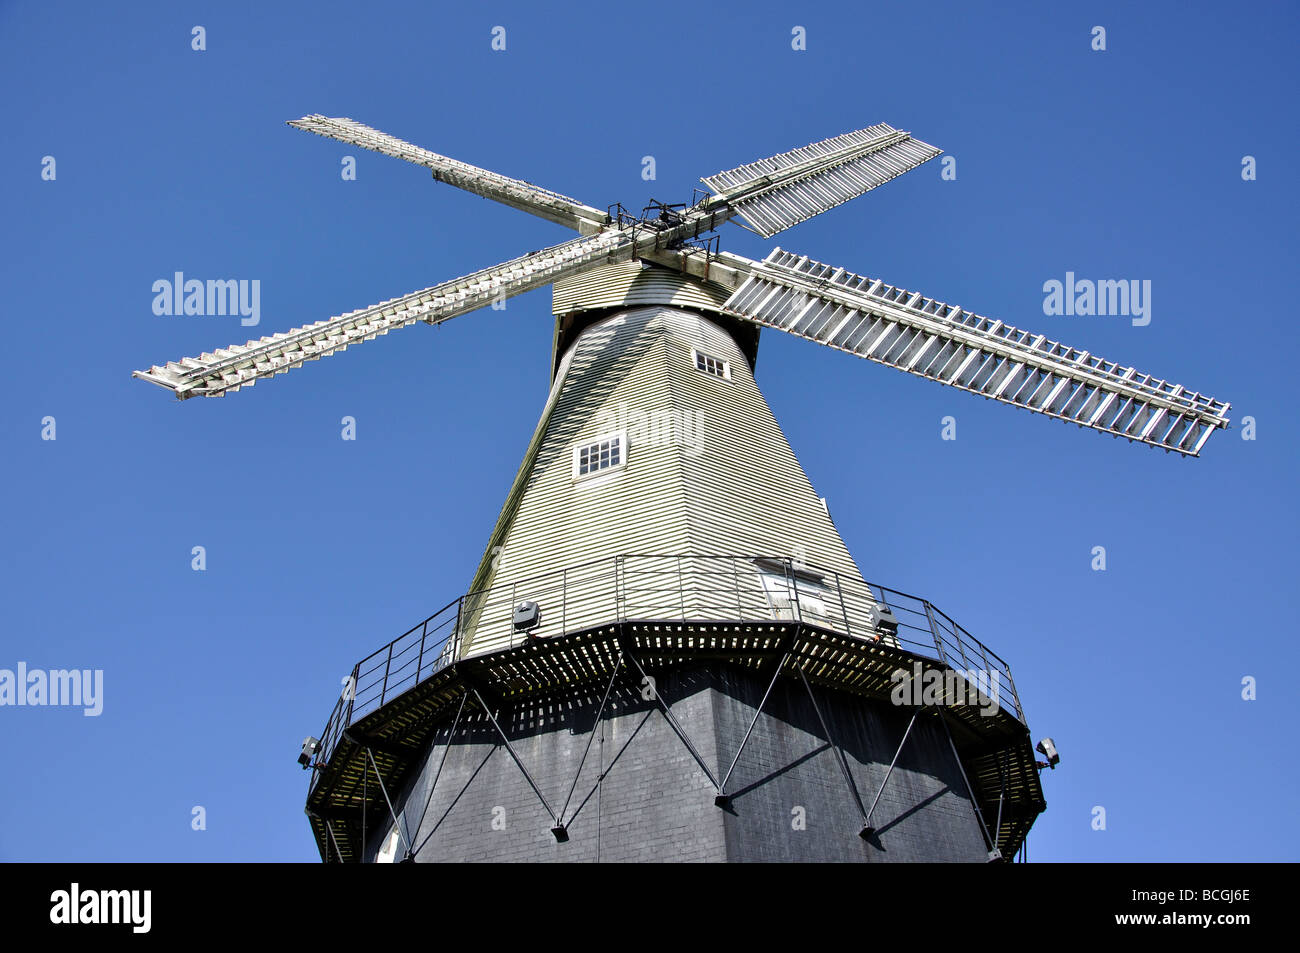 Union Mill, The Hill, Cranbrook, Kent, England, United Kingdom Stock Photo